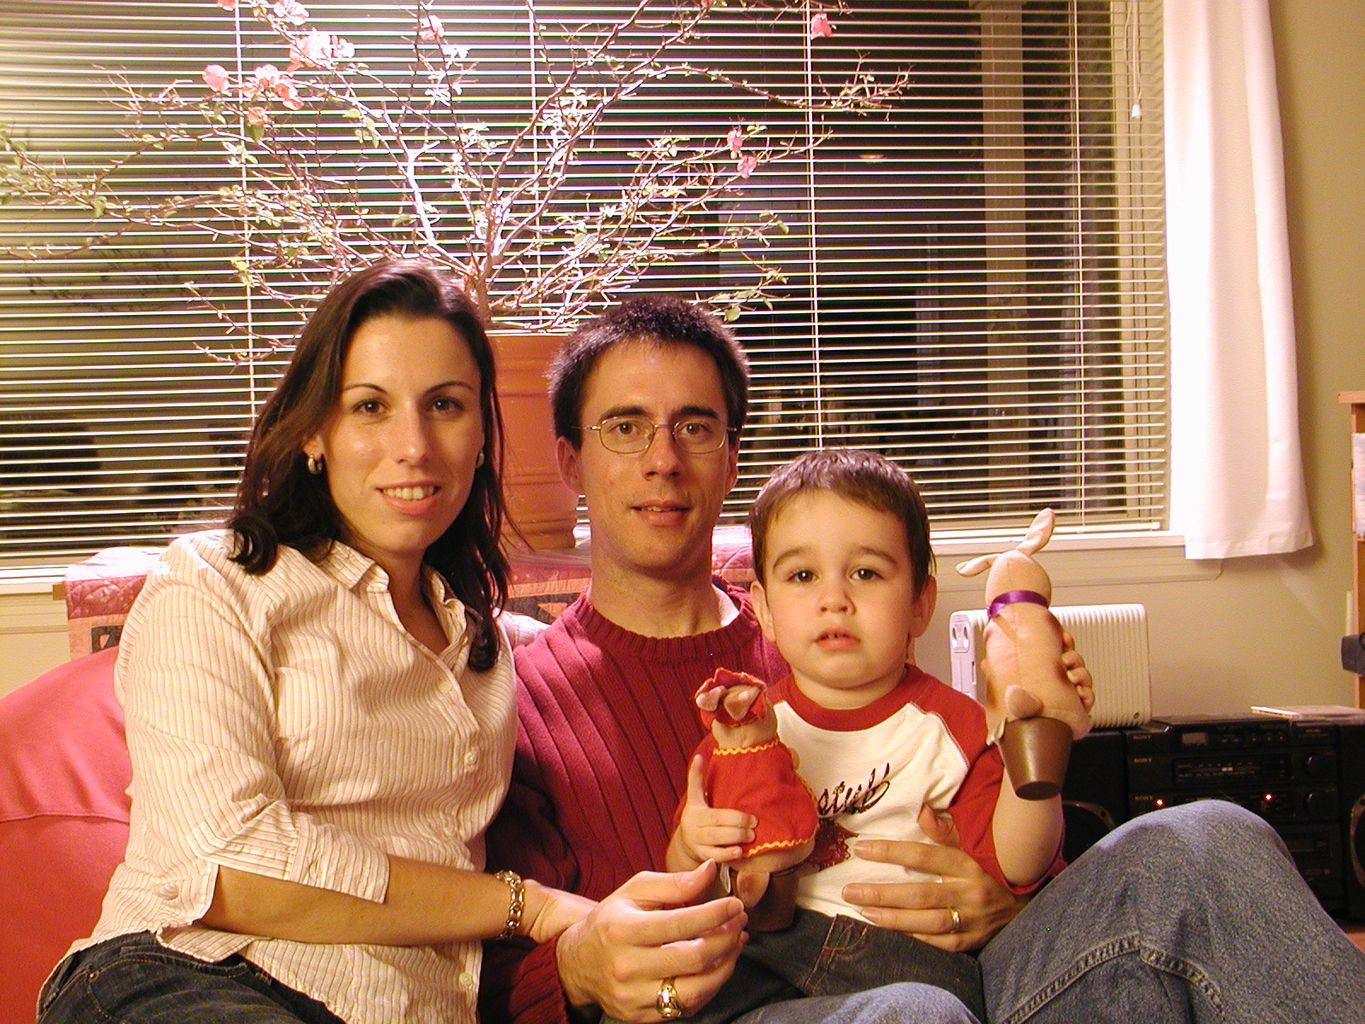 Family Shots for Christmas 2004
